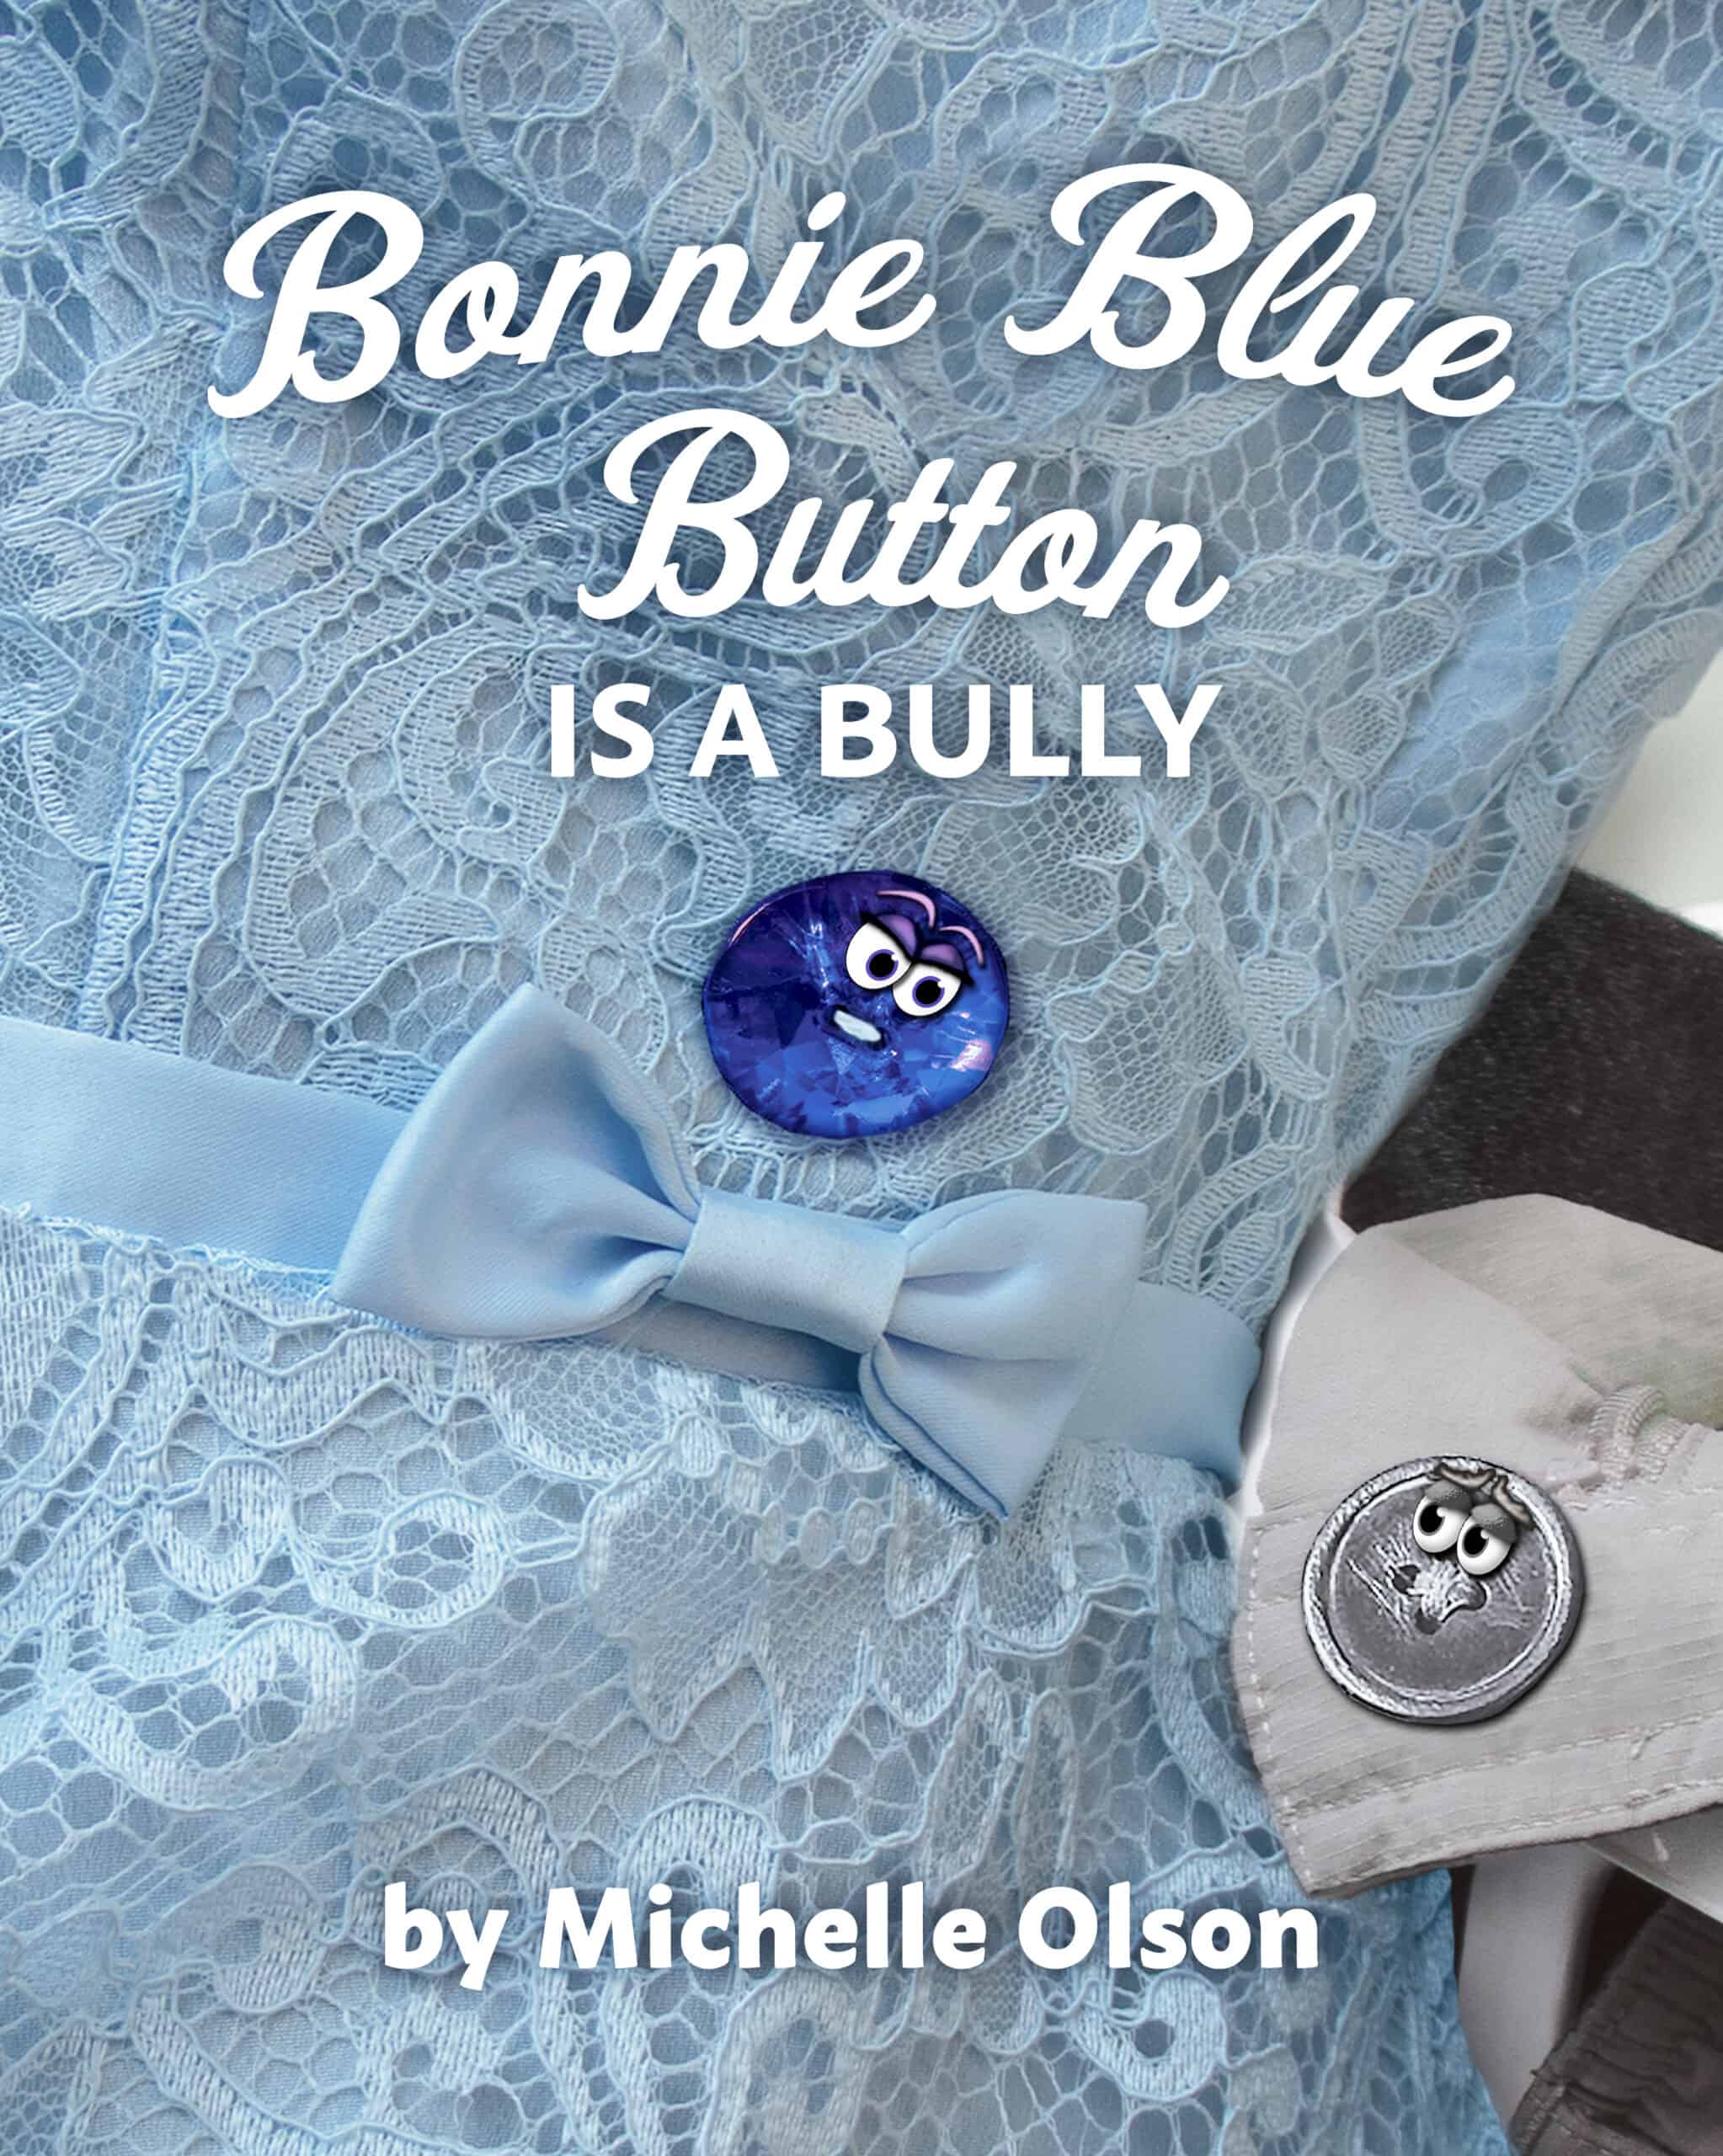 Bonnie Blue Button cover